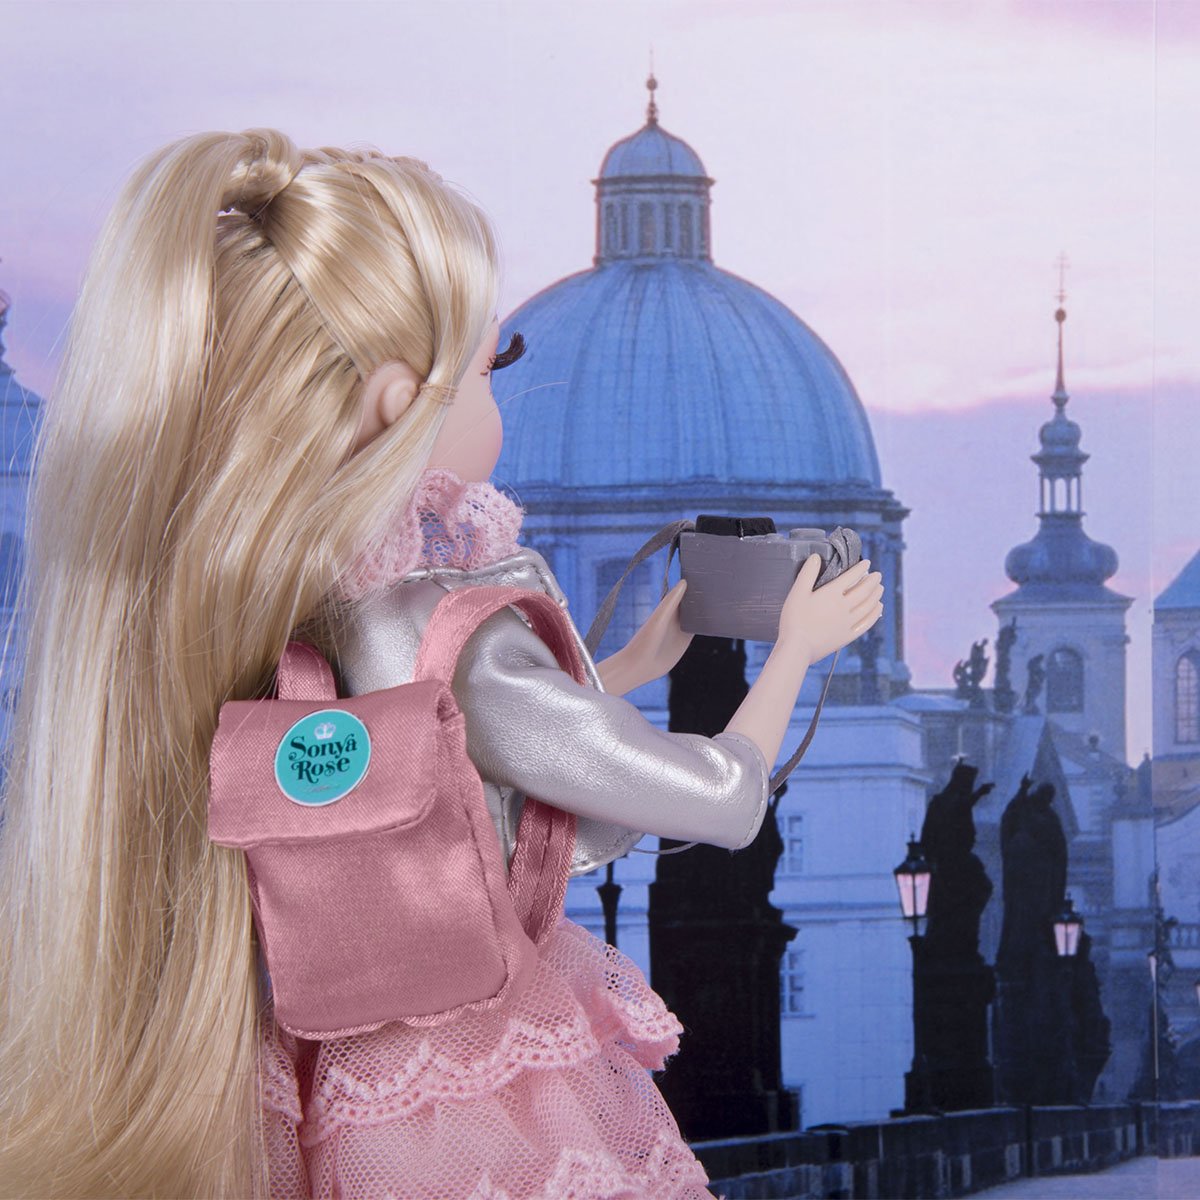 Кукла Sonyа Rose серии Daily collechion Вечеринка Путешествие